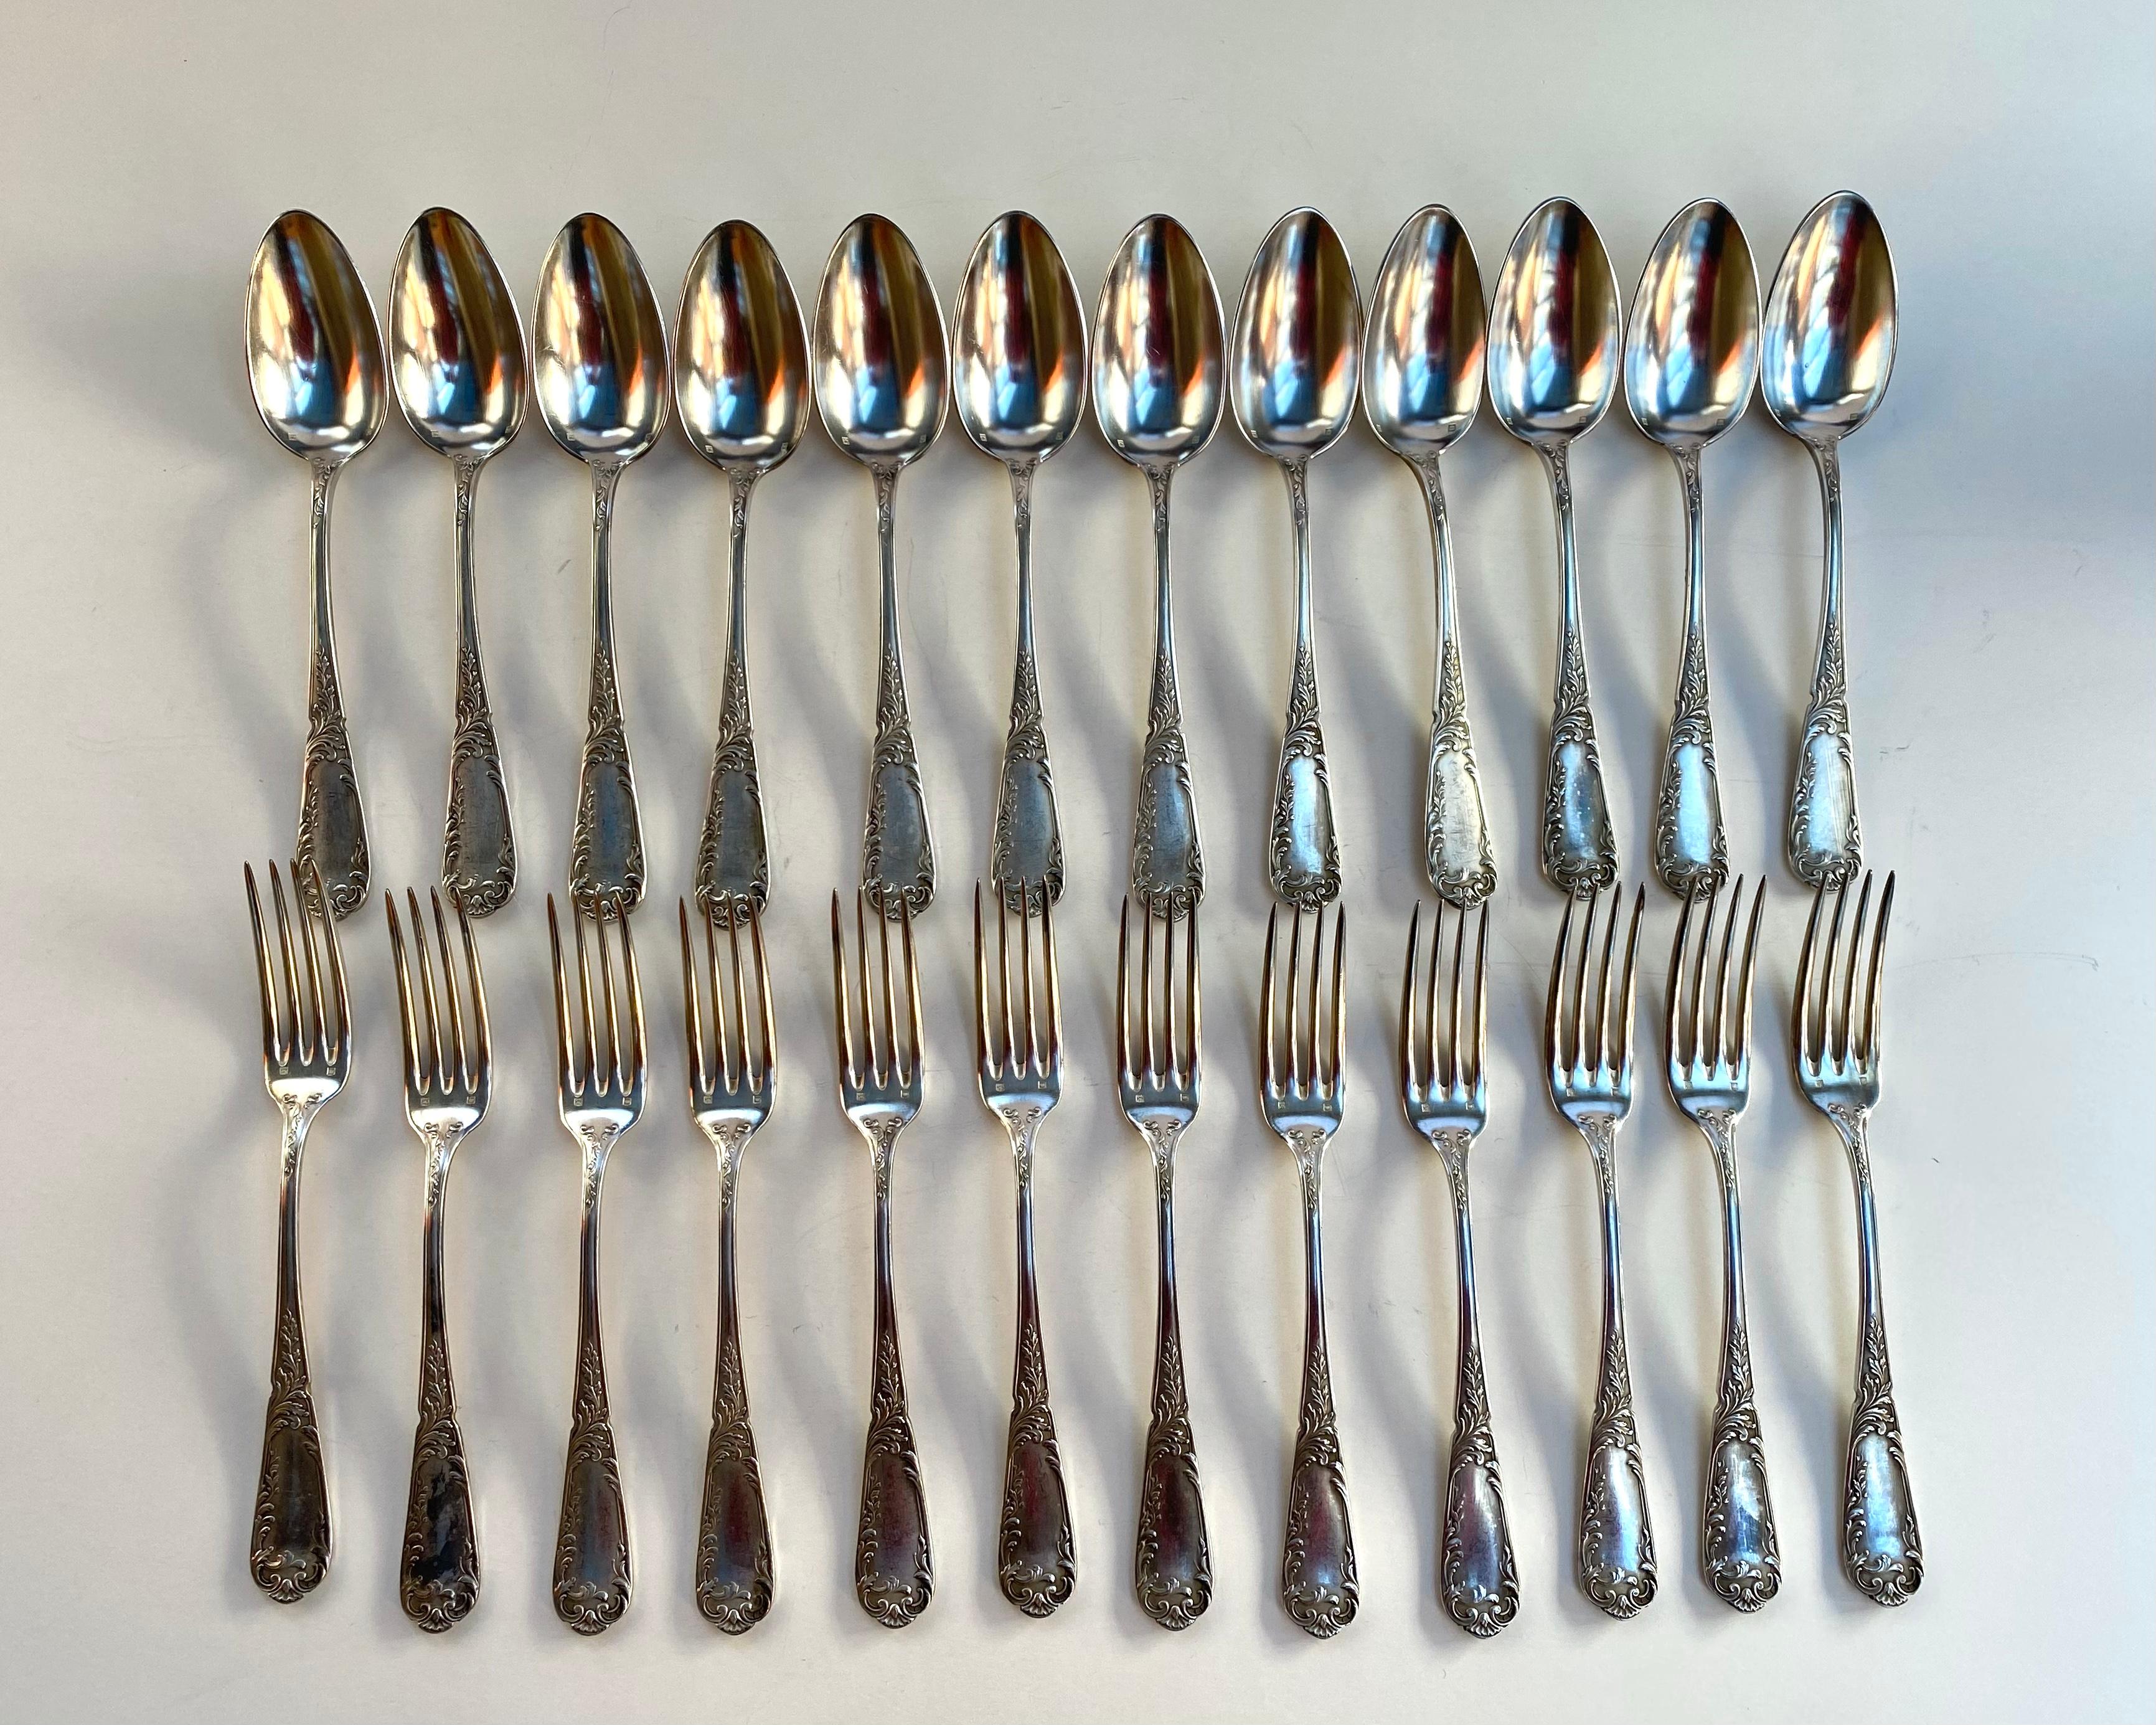 French Vintage Silver Plate Utensils 12 Spoons 12 Forks France 1950s For Sale